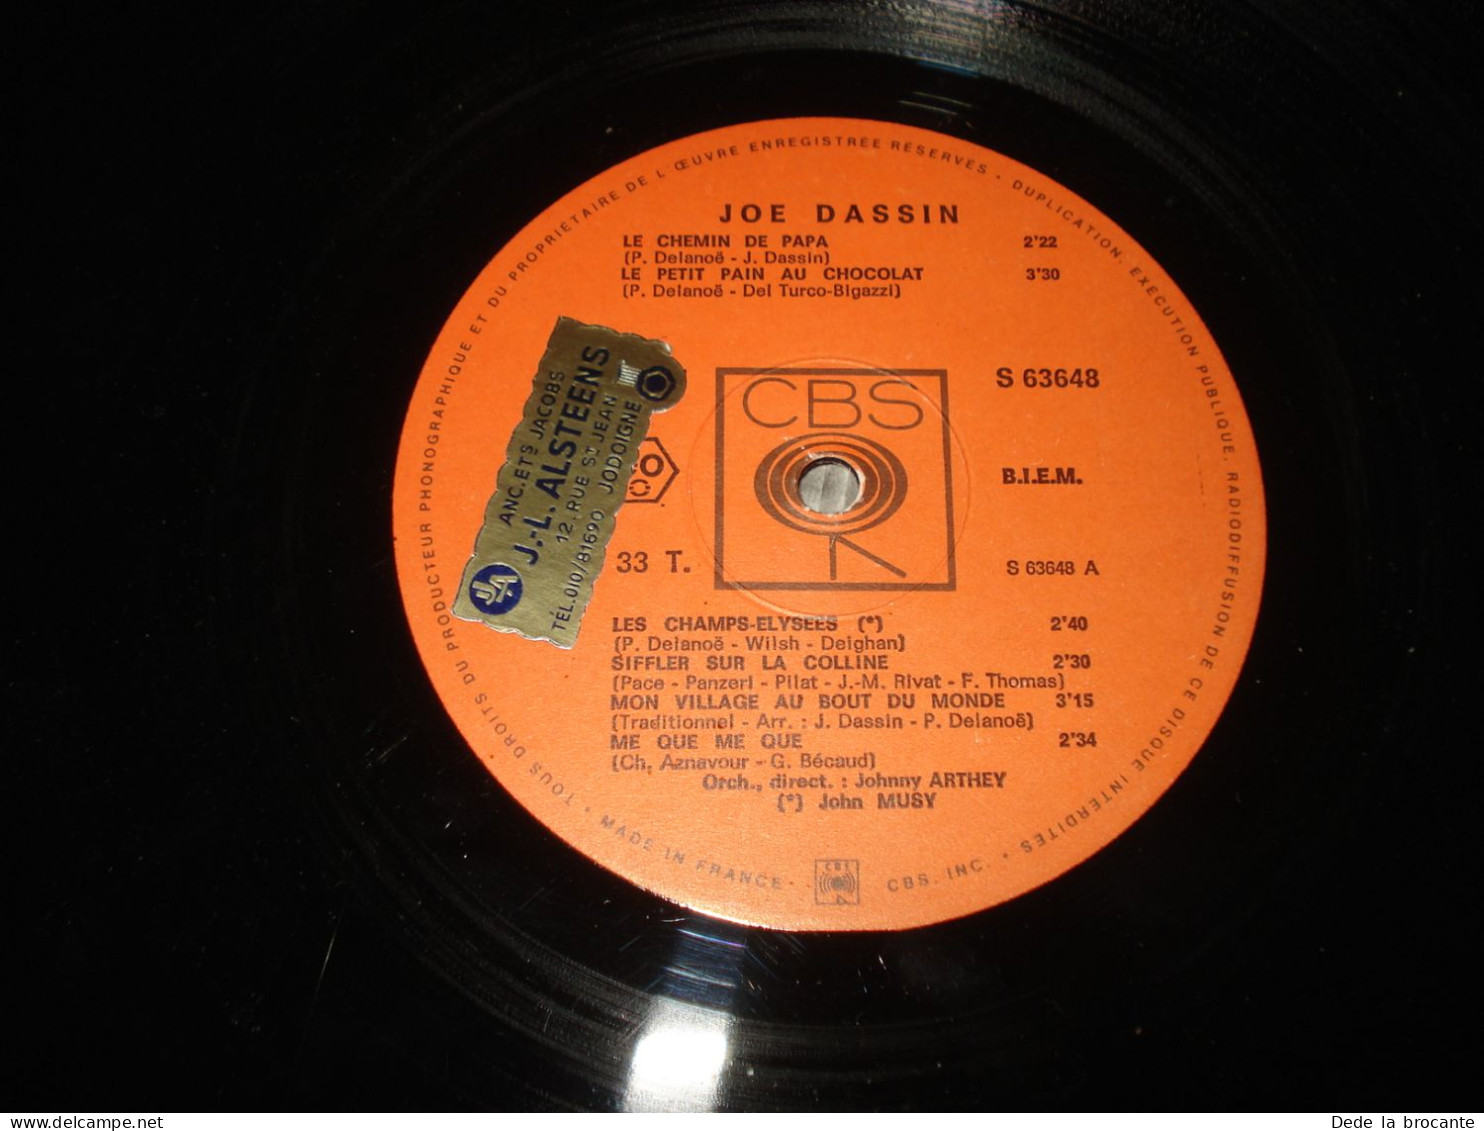 B14 / Joe Dassin – LP – Pochette ouvrante - CBS – S 63648 - Fr 1969  NM/NM